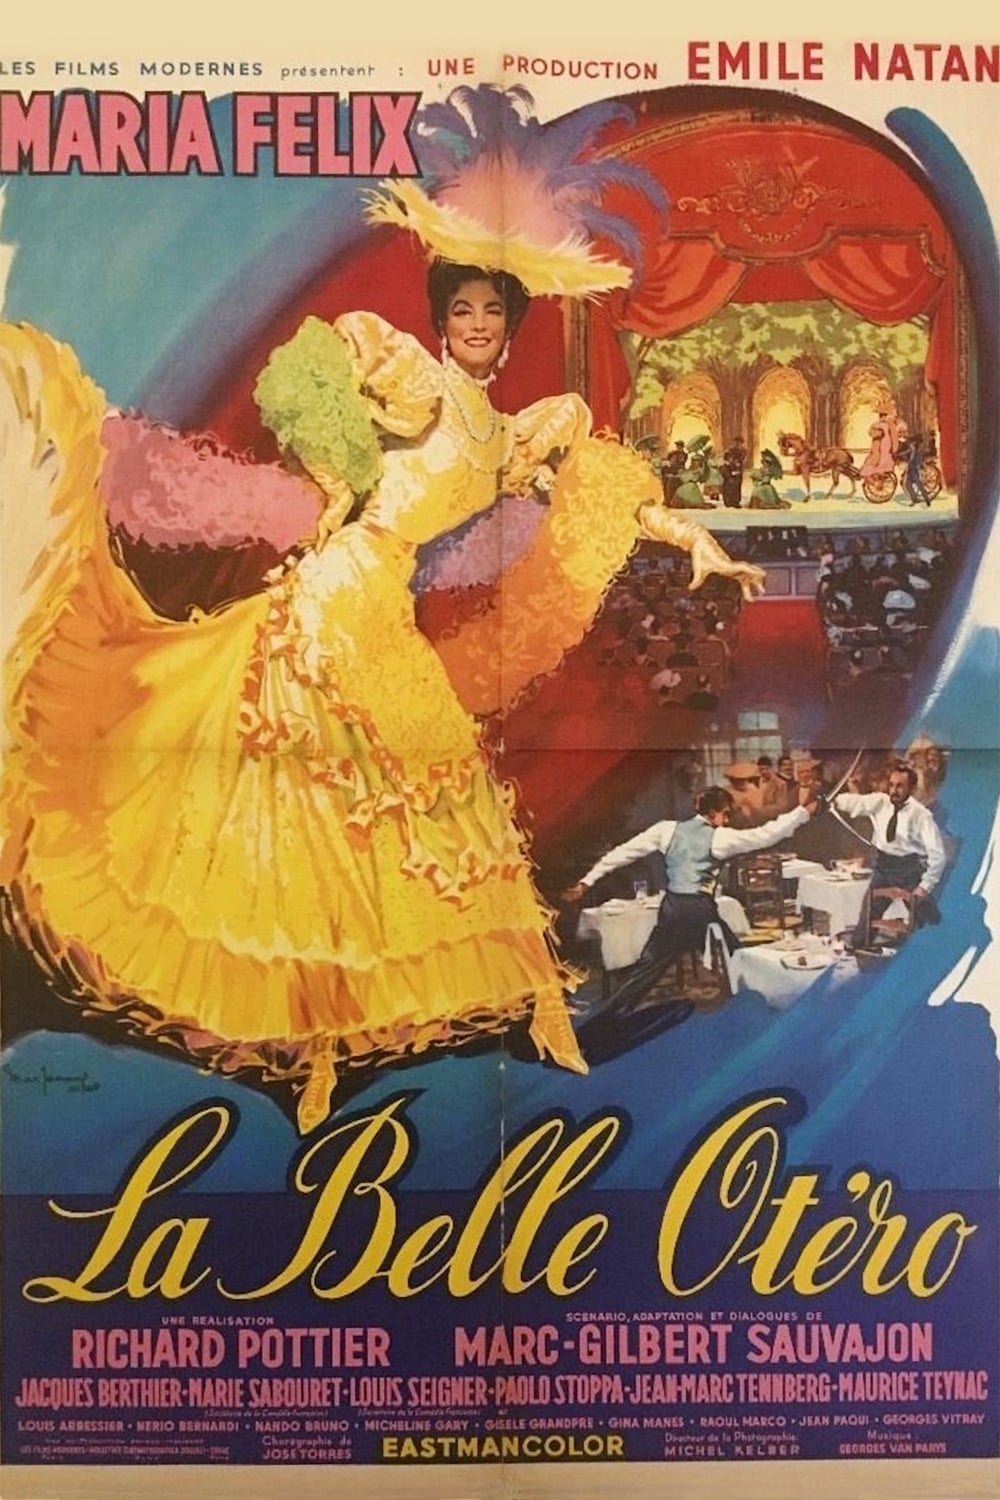 The Beautiful Otero (1954)